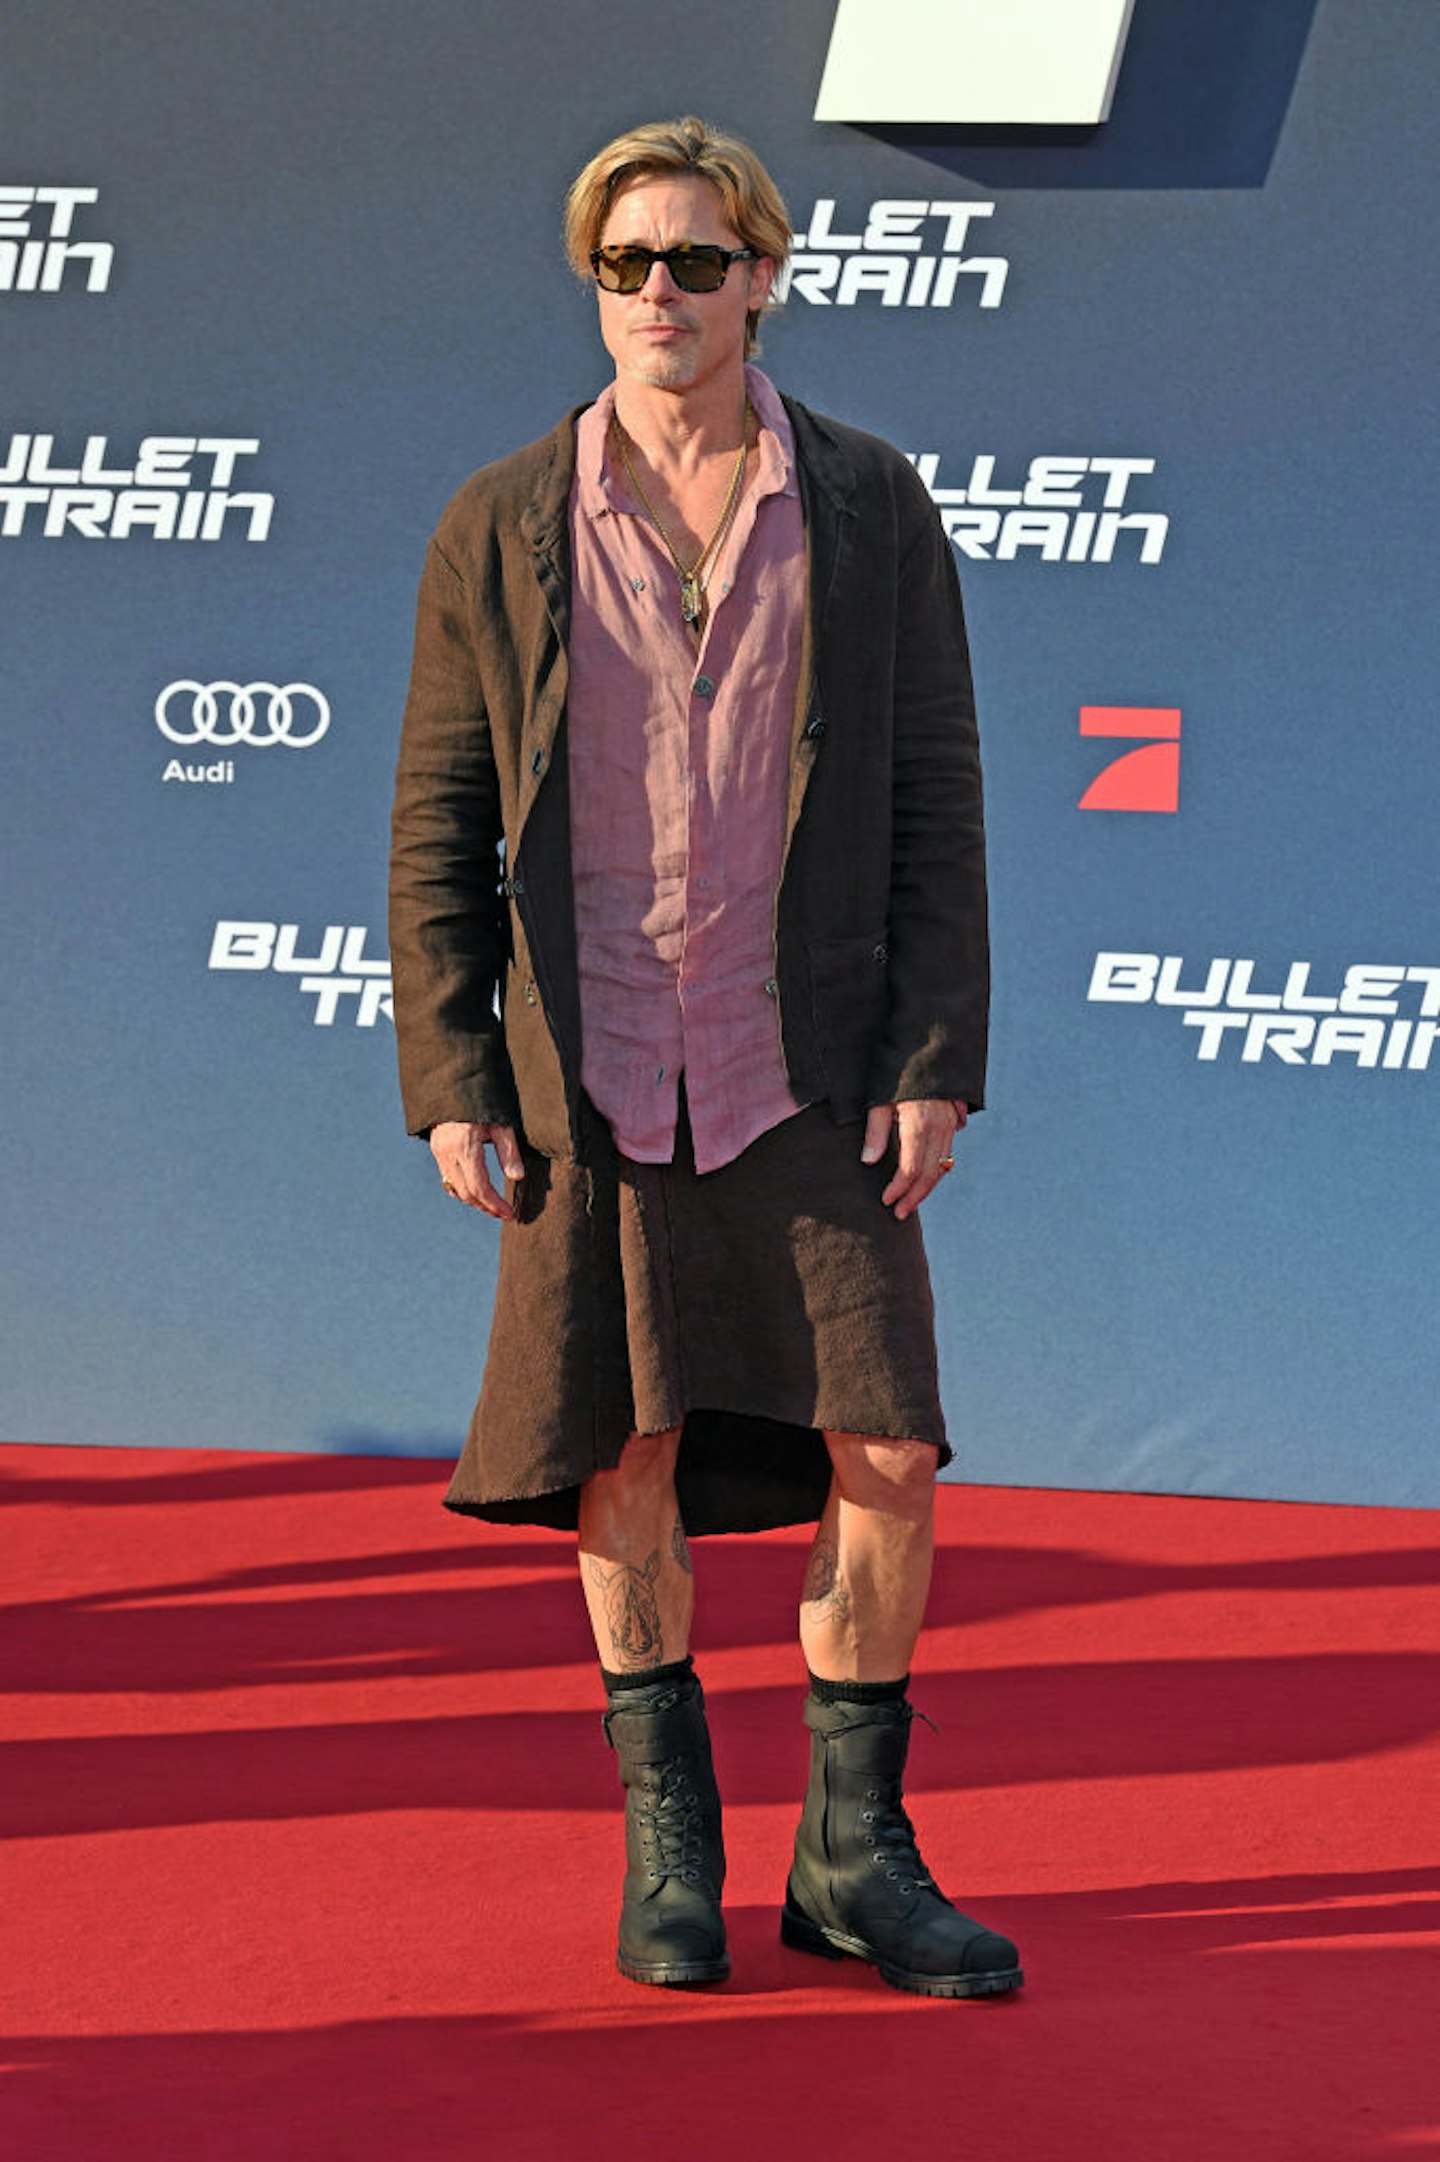 Brad Pitt Bullet Train premiere